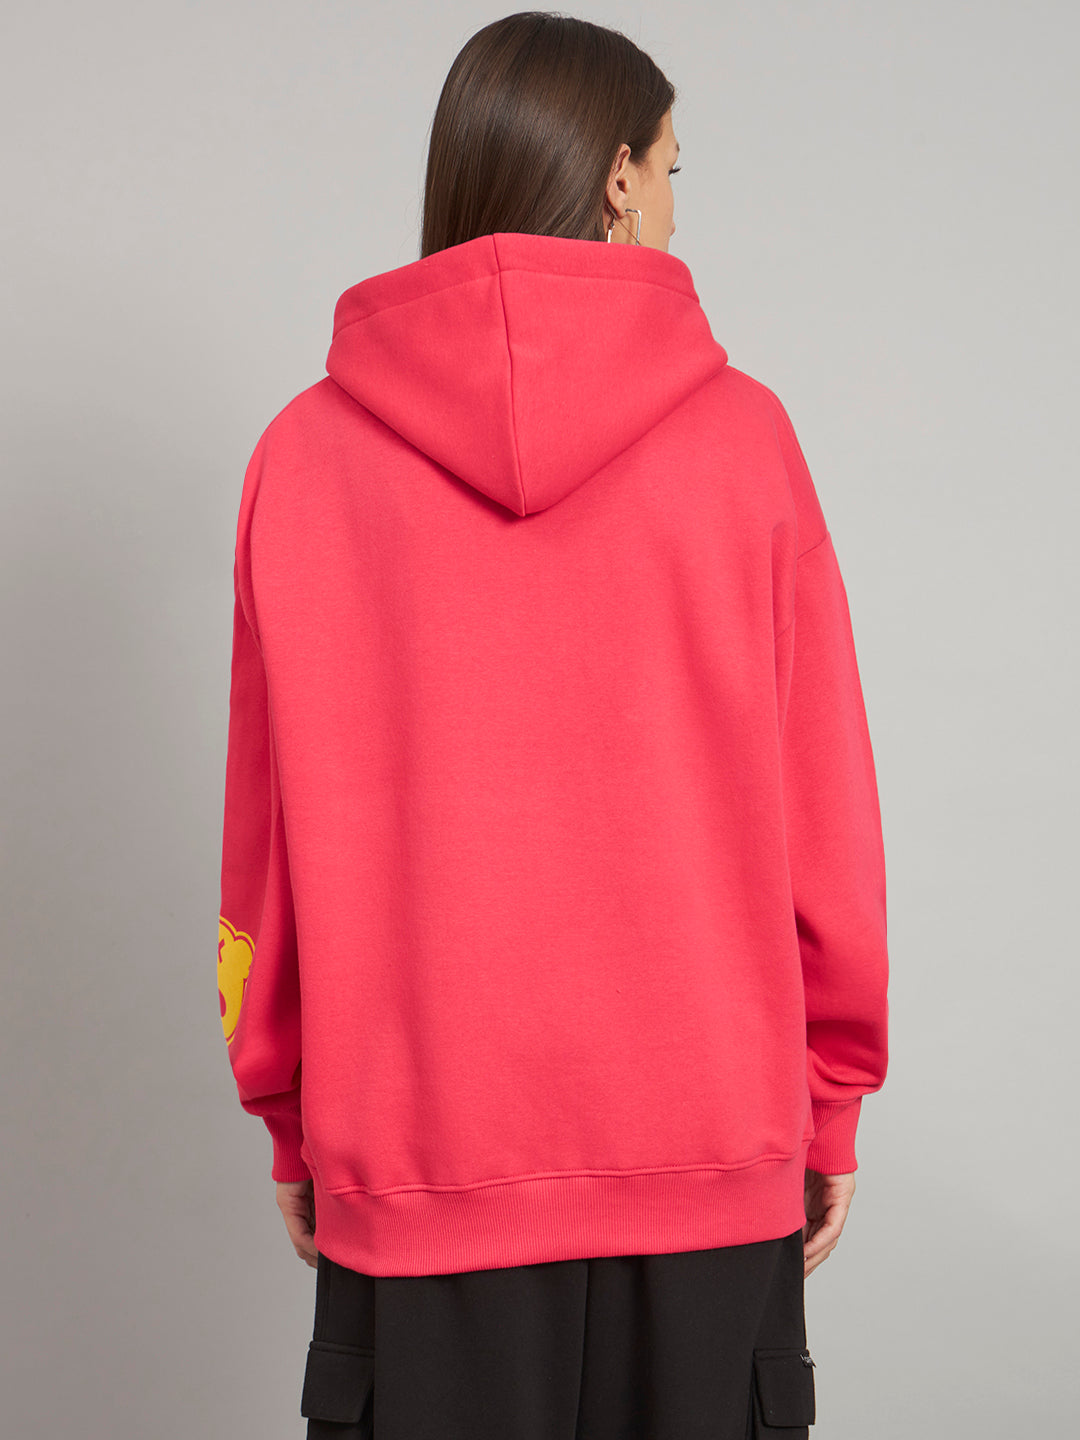 Griffel Women's Pink GFL Bear Planet print Oversized Fleece Hoodie Sweatshirt